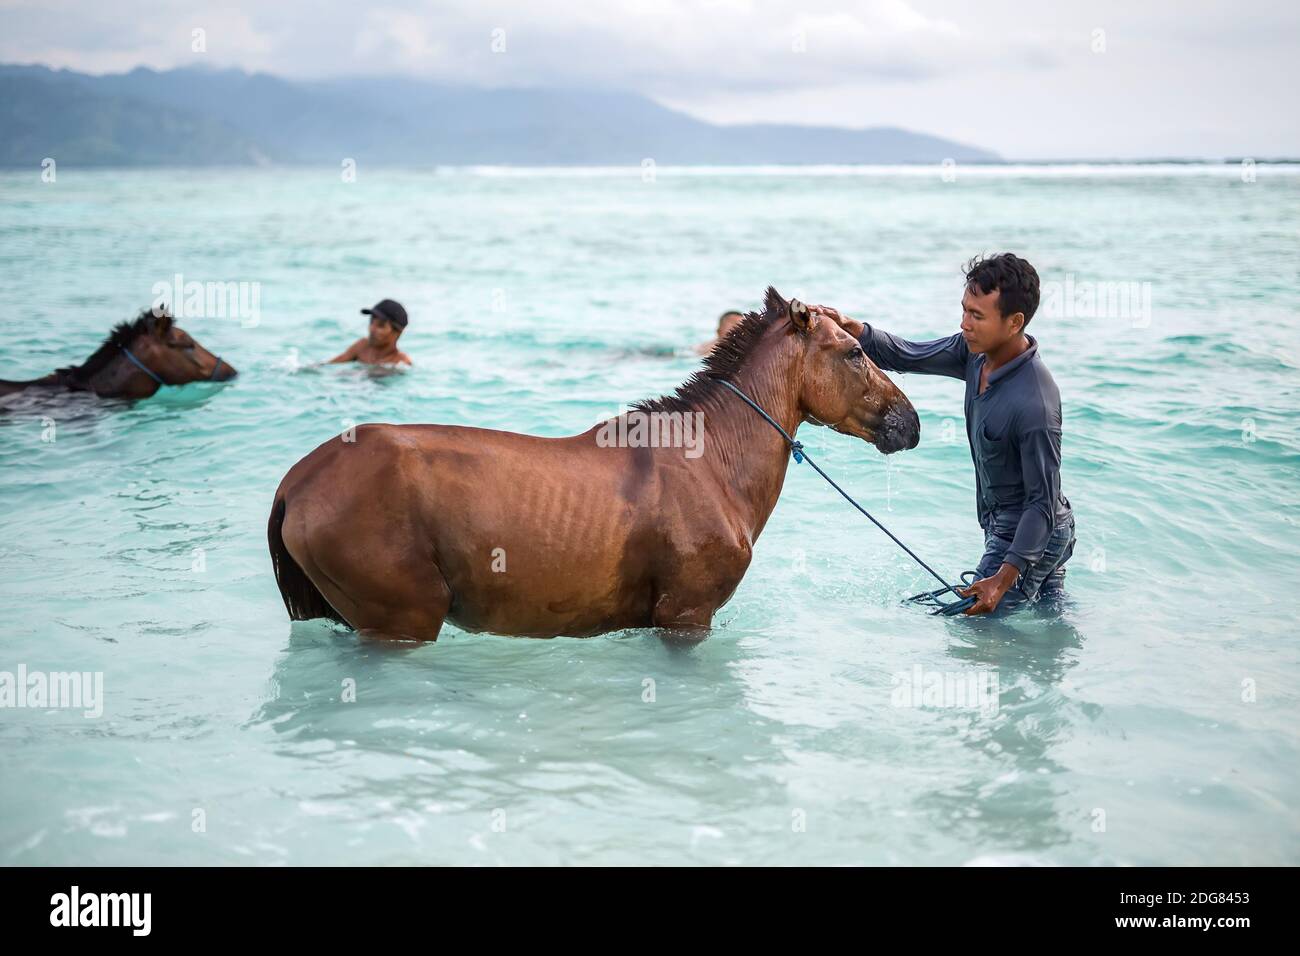 Men with horses in sea Stock Photo